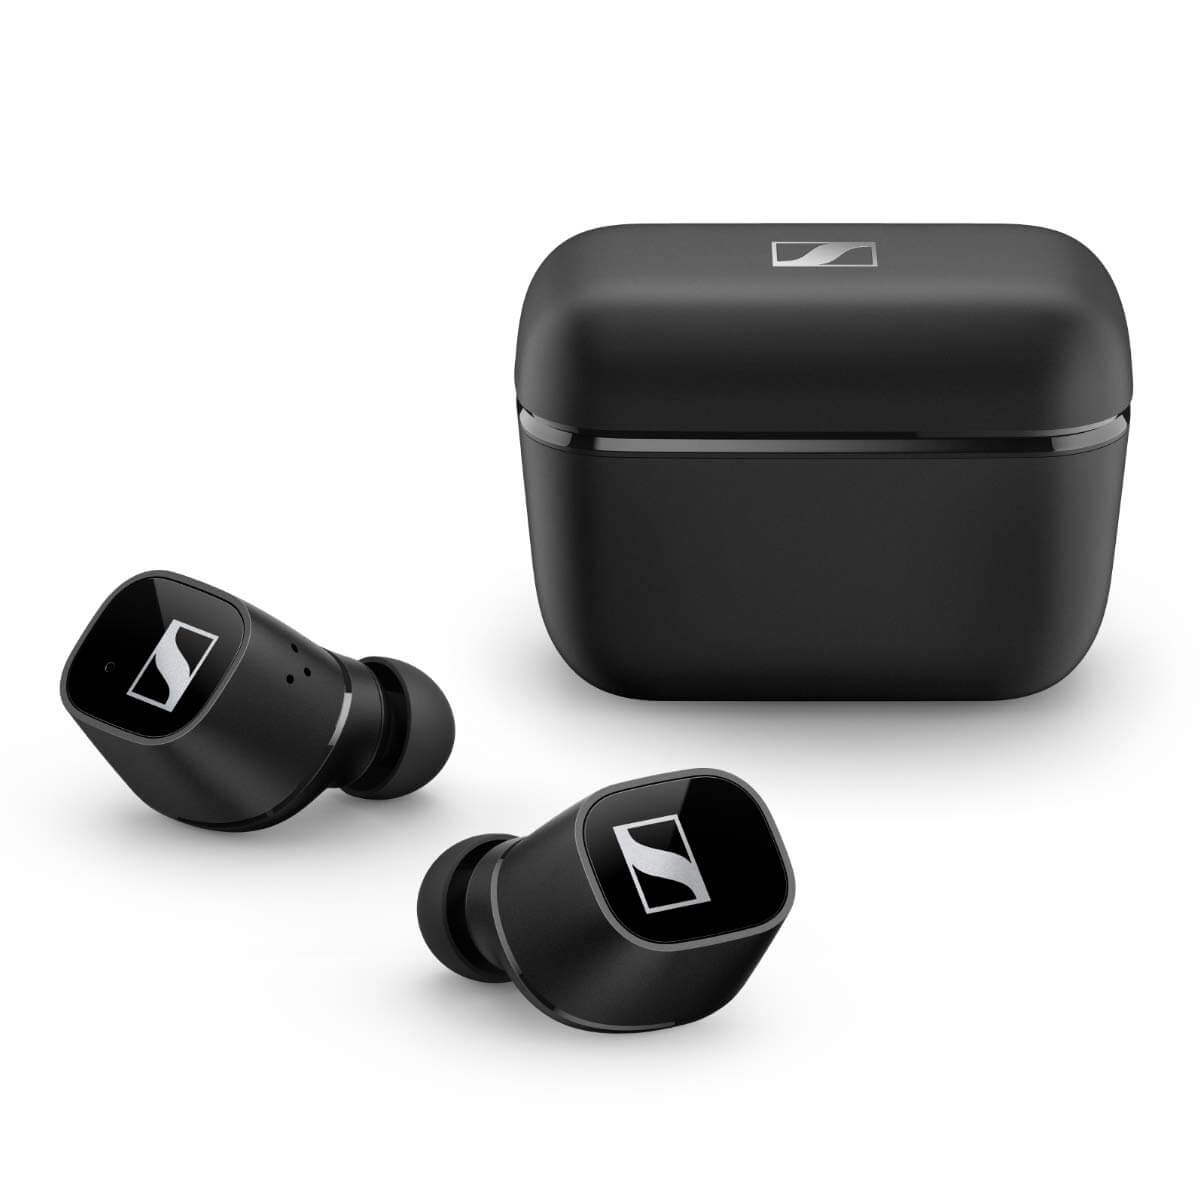 Sennheiser CX 400BT Truly Wireless Bluetooth in Ear Headphone with Mic (Black)